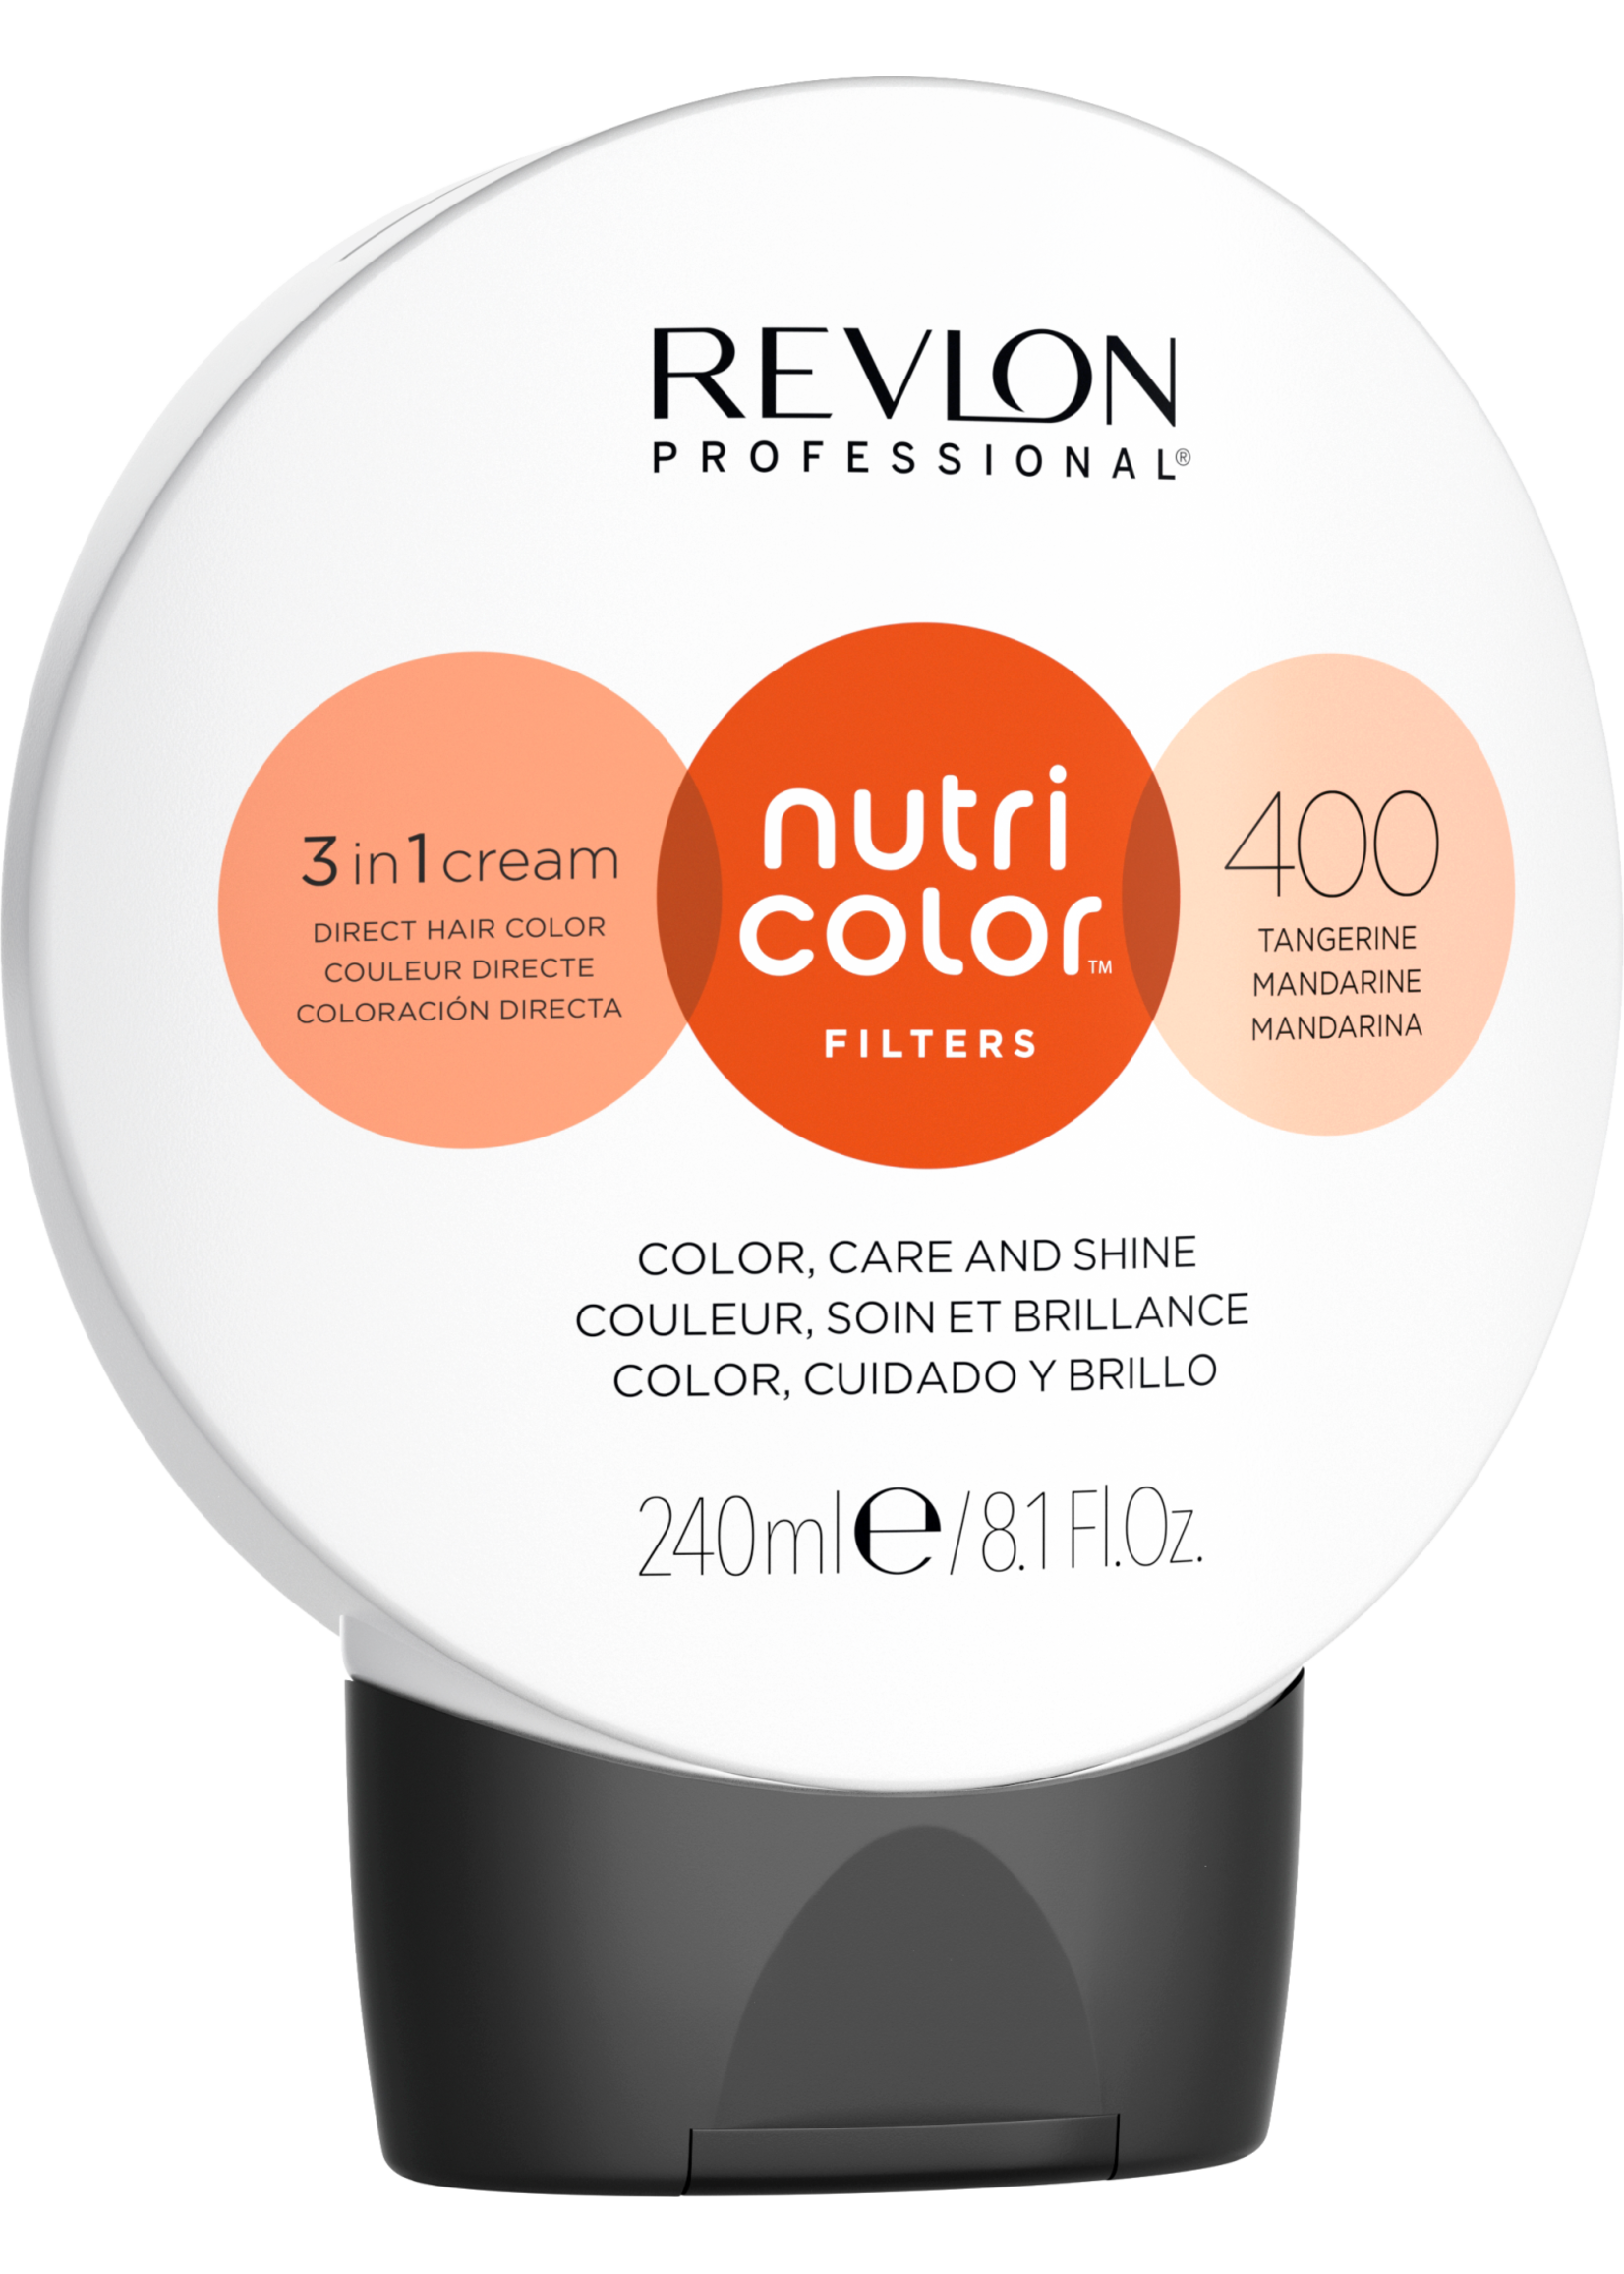 Revlon Professional Revlon Professional Nutri Color Filters 400 Tangerine 240ml